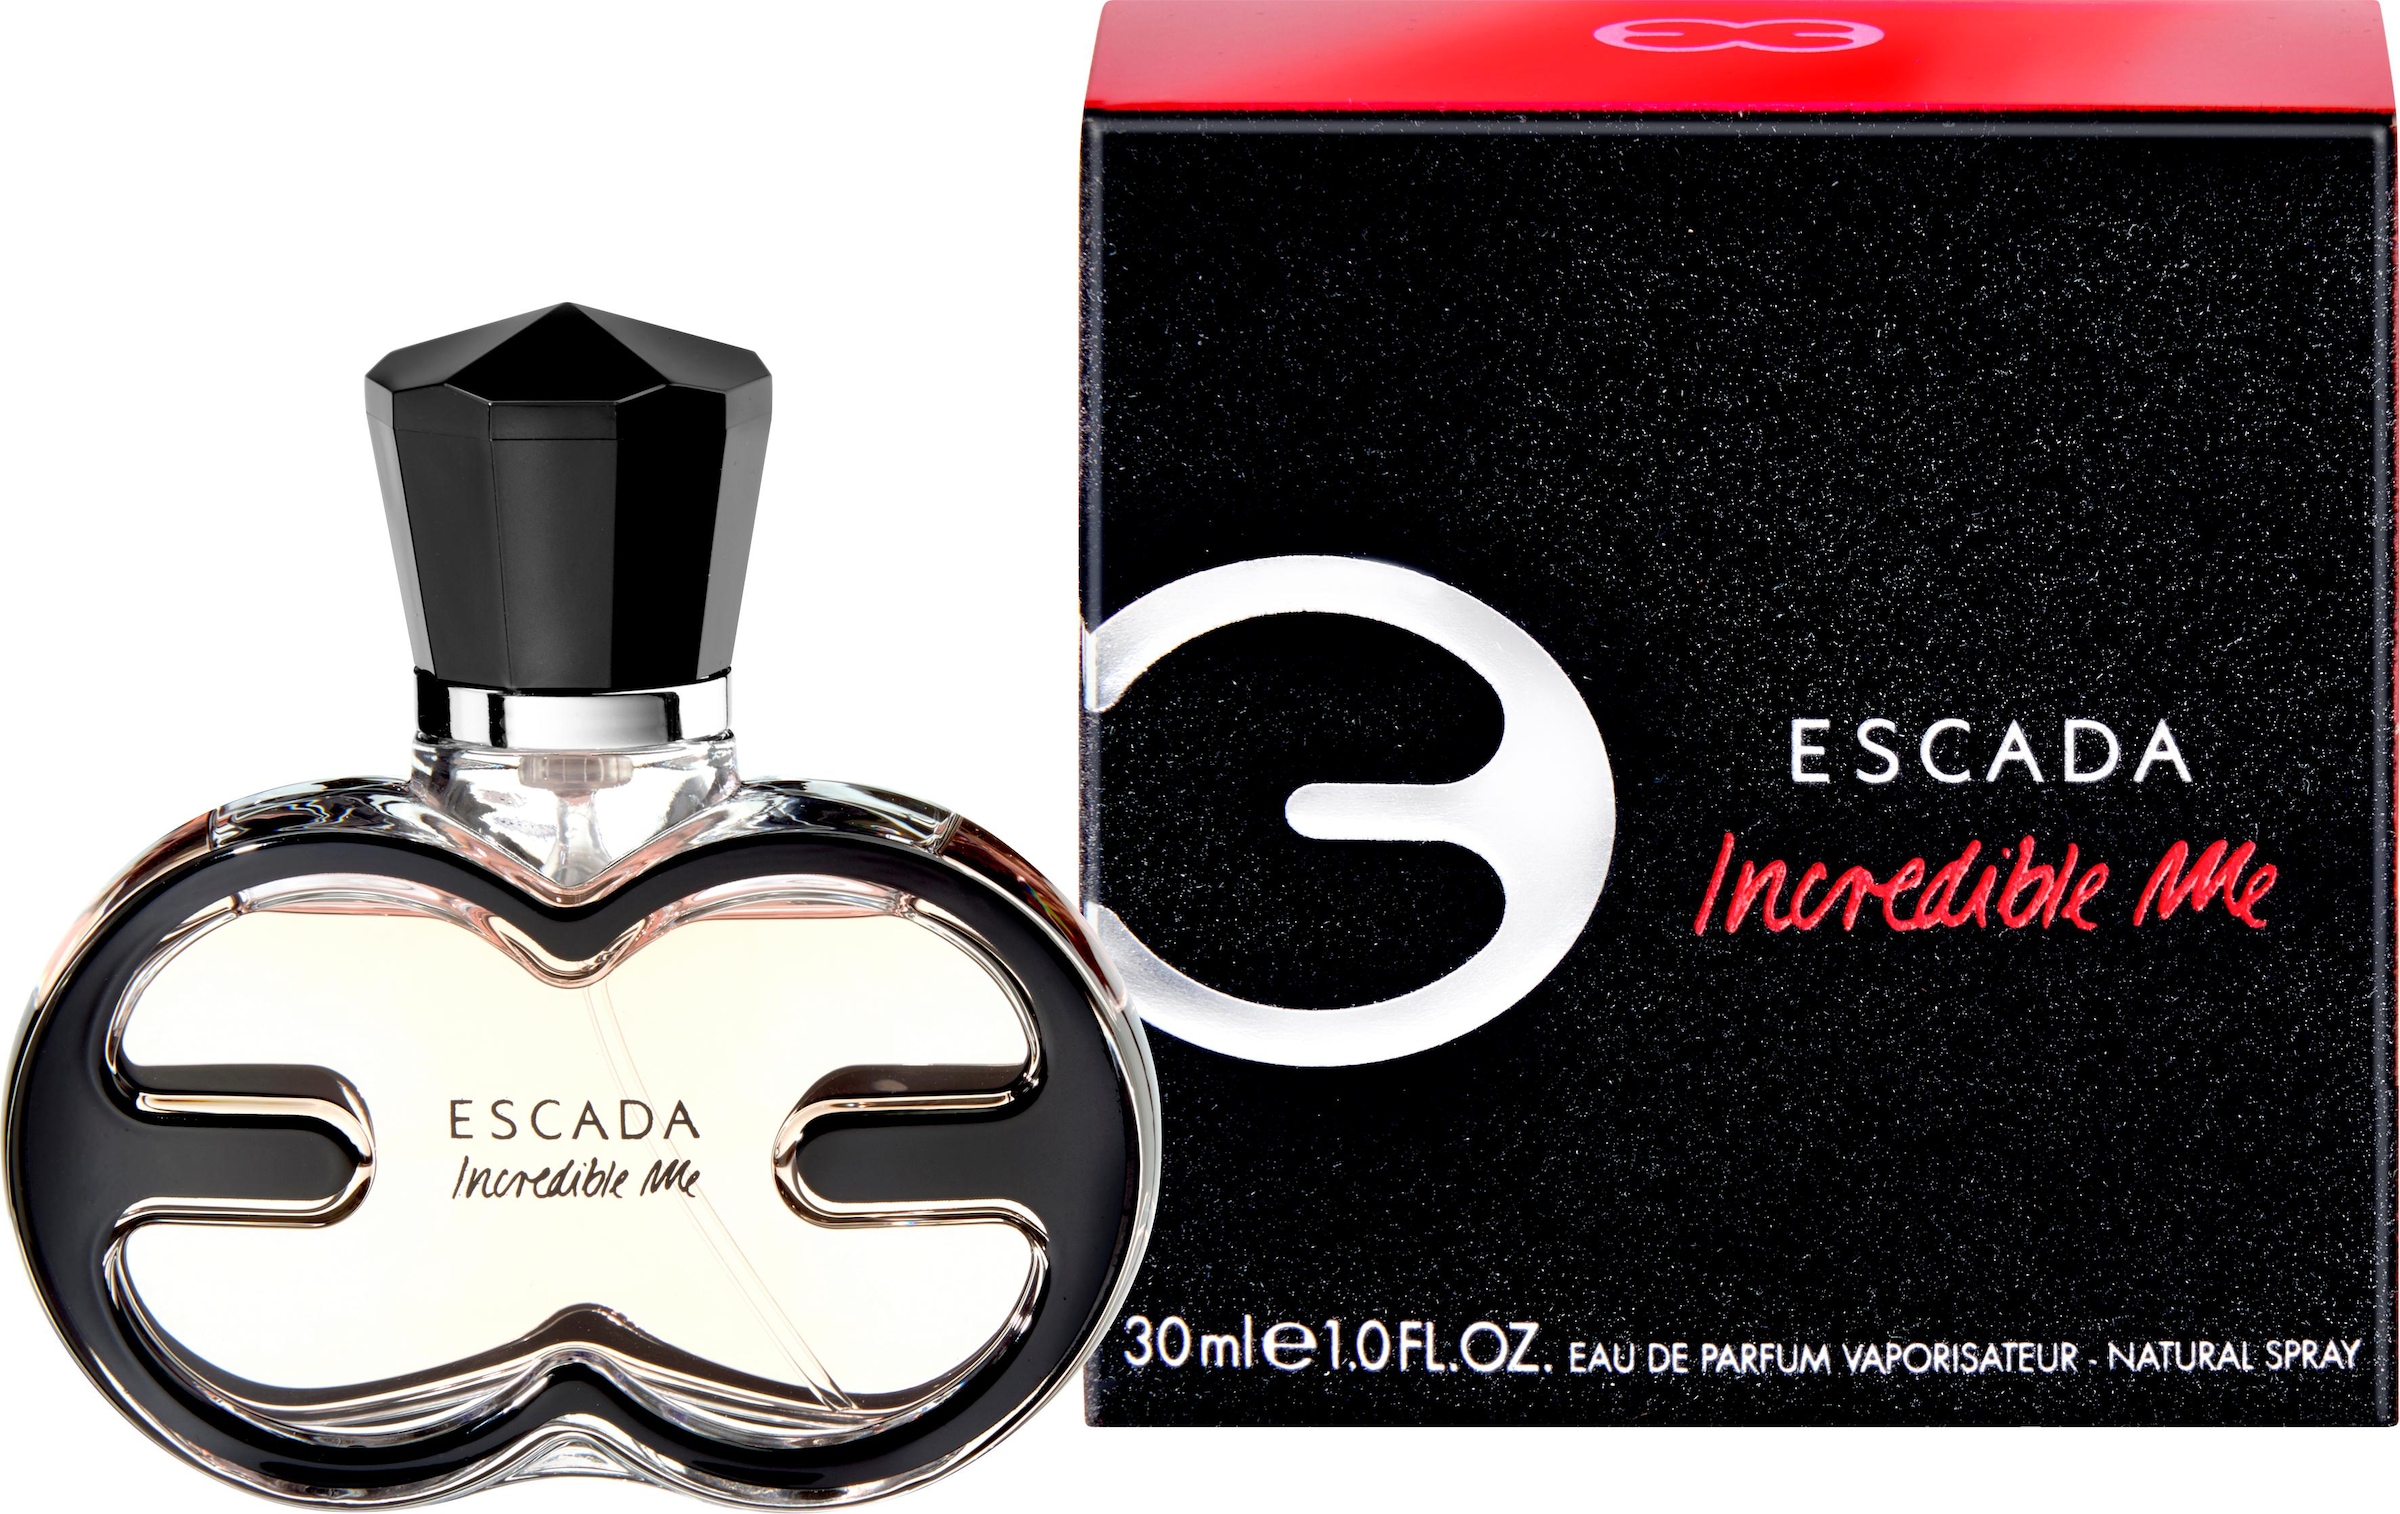 ESCADA Eau Parfum »Escada Incredible bequem Me« de bestellen